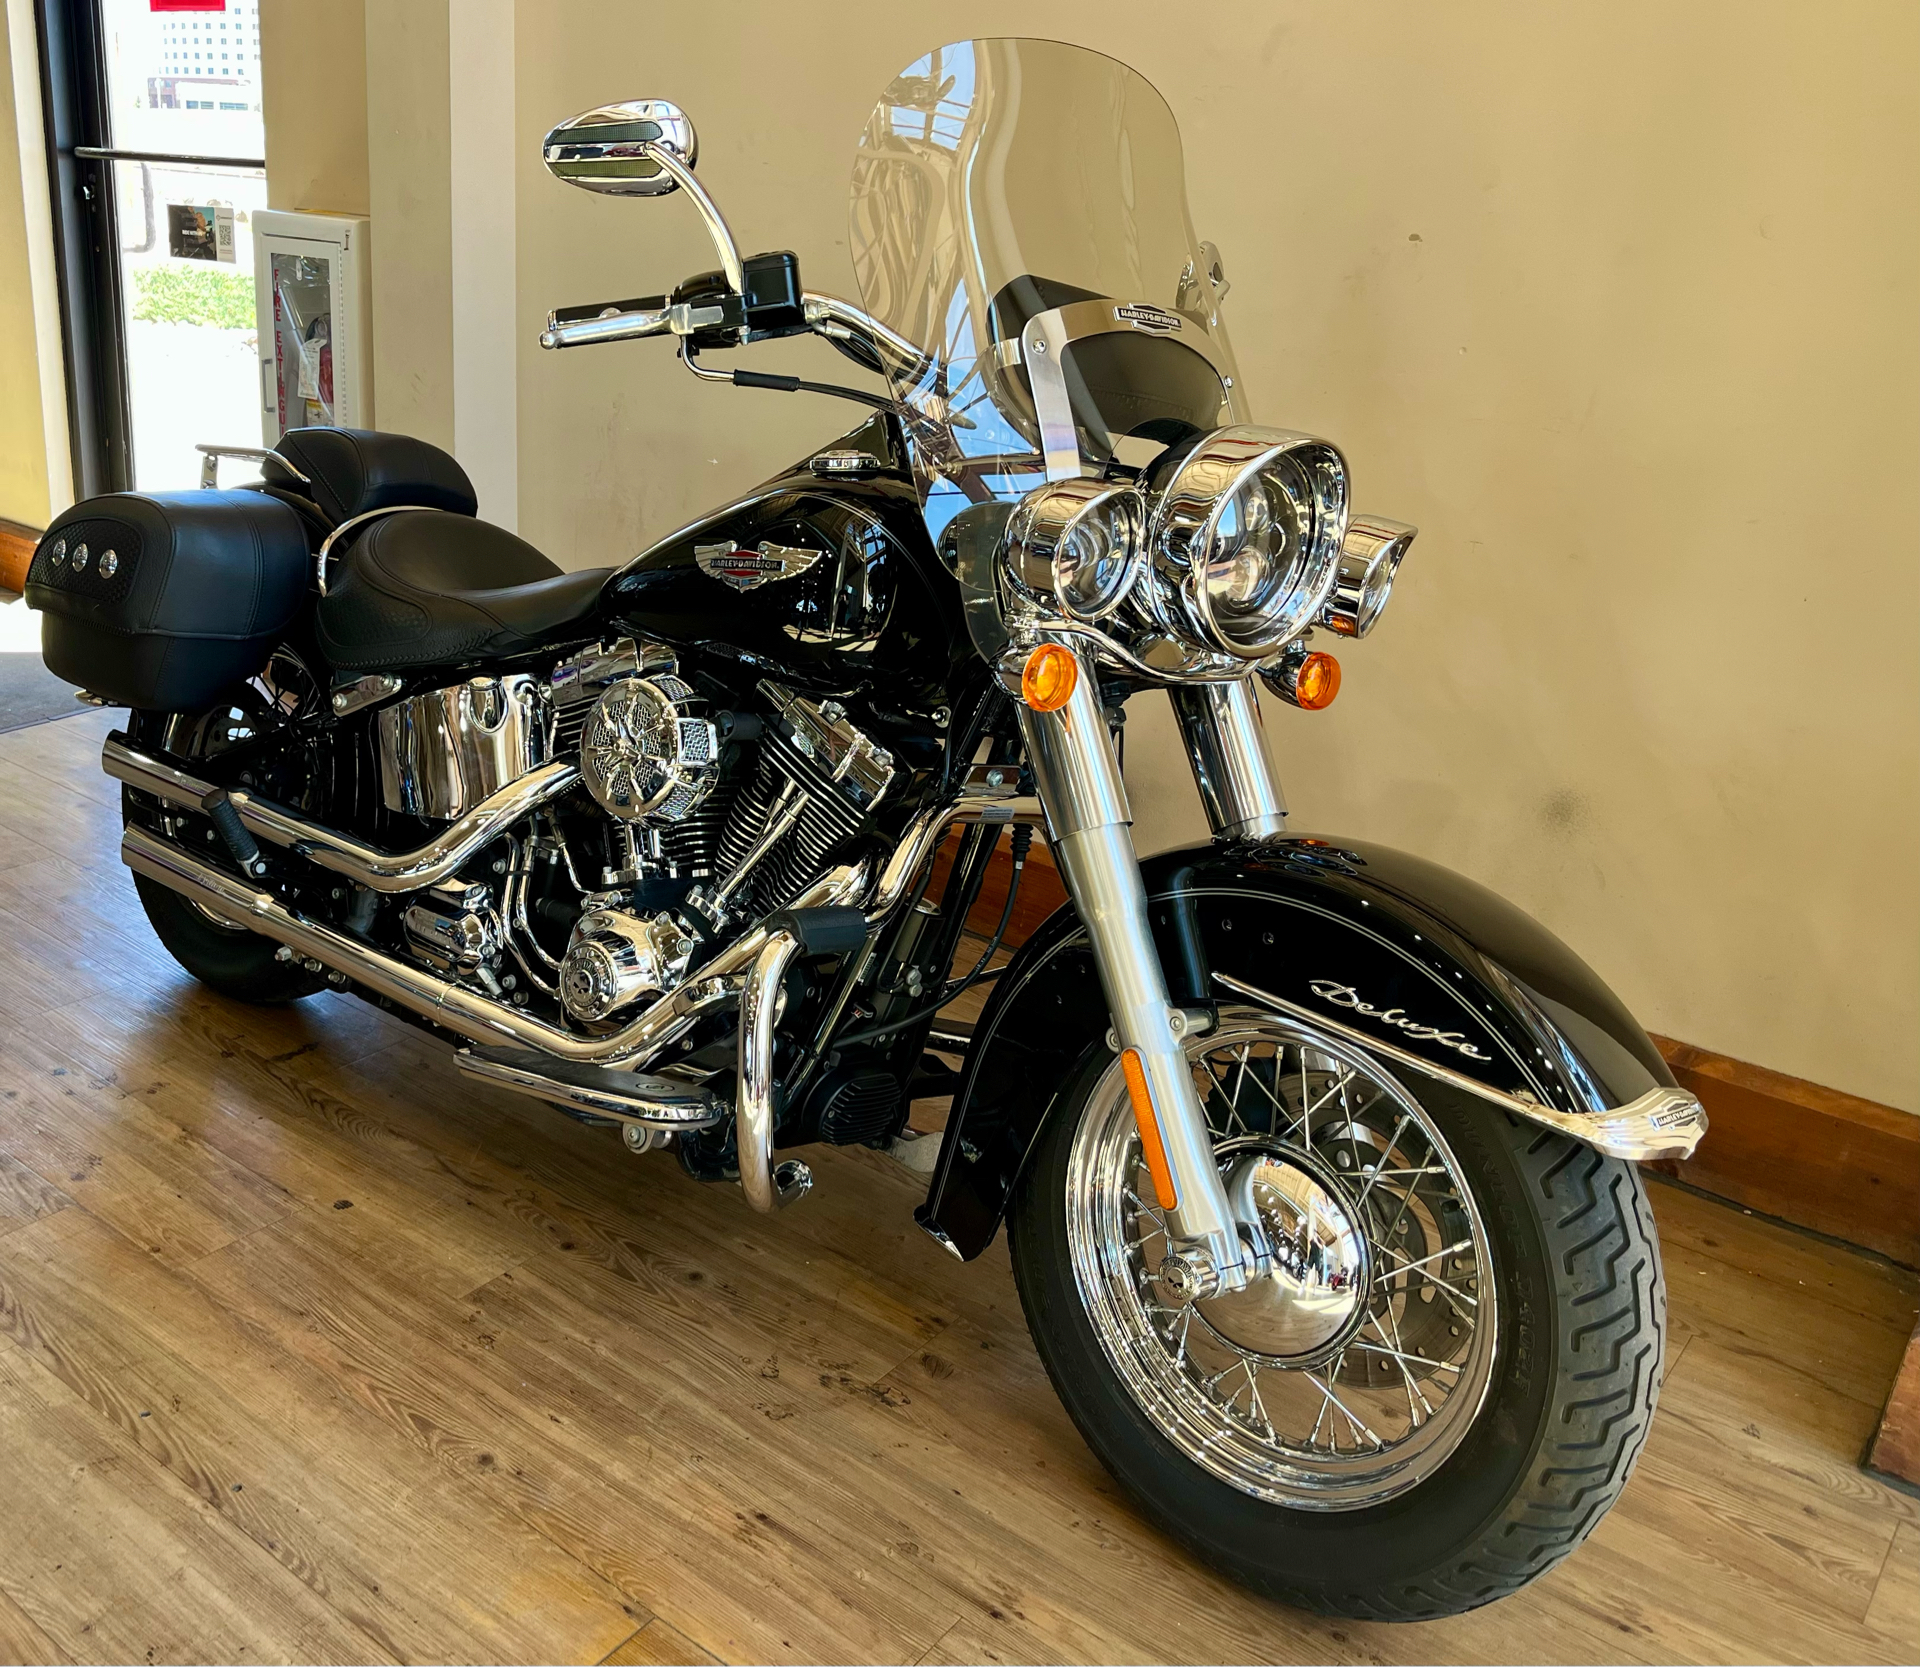 2011 Harley-Davidson Softail® Deluxe in Loveland, Colorado - Photo 2